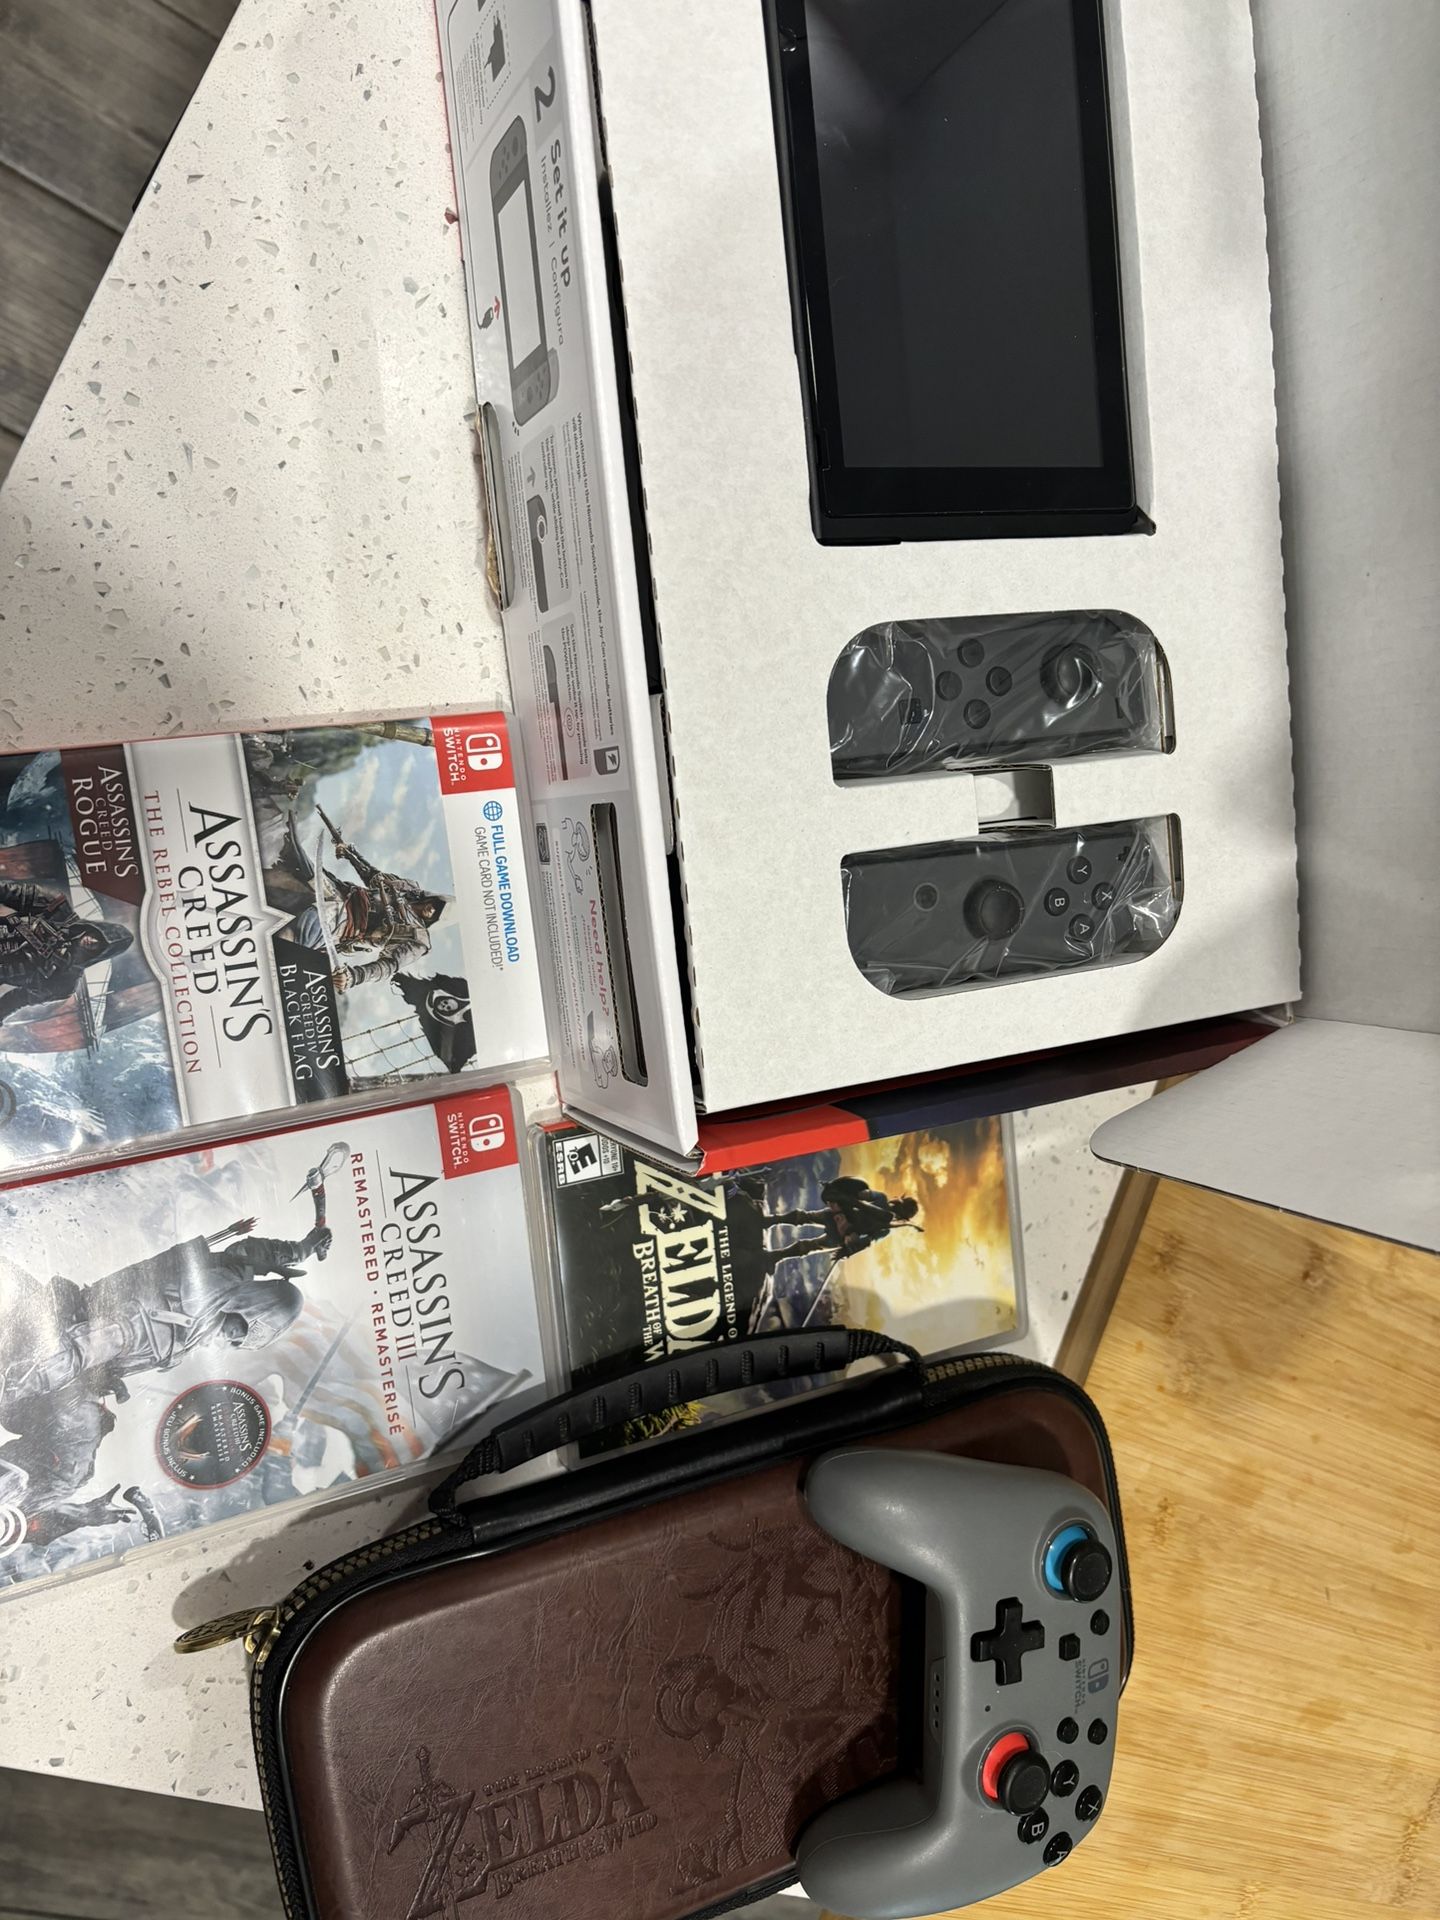 Nintendo Switch, Controller, Case